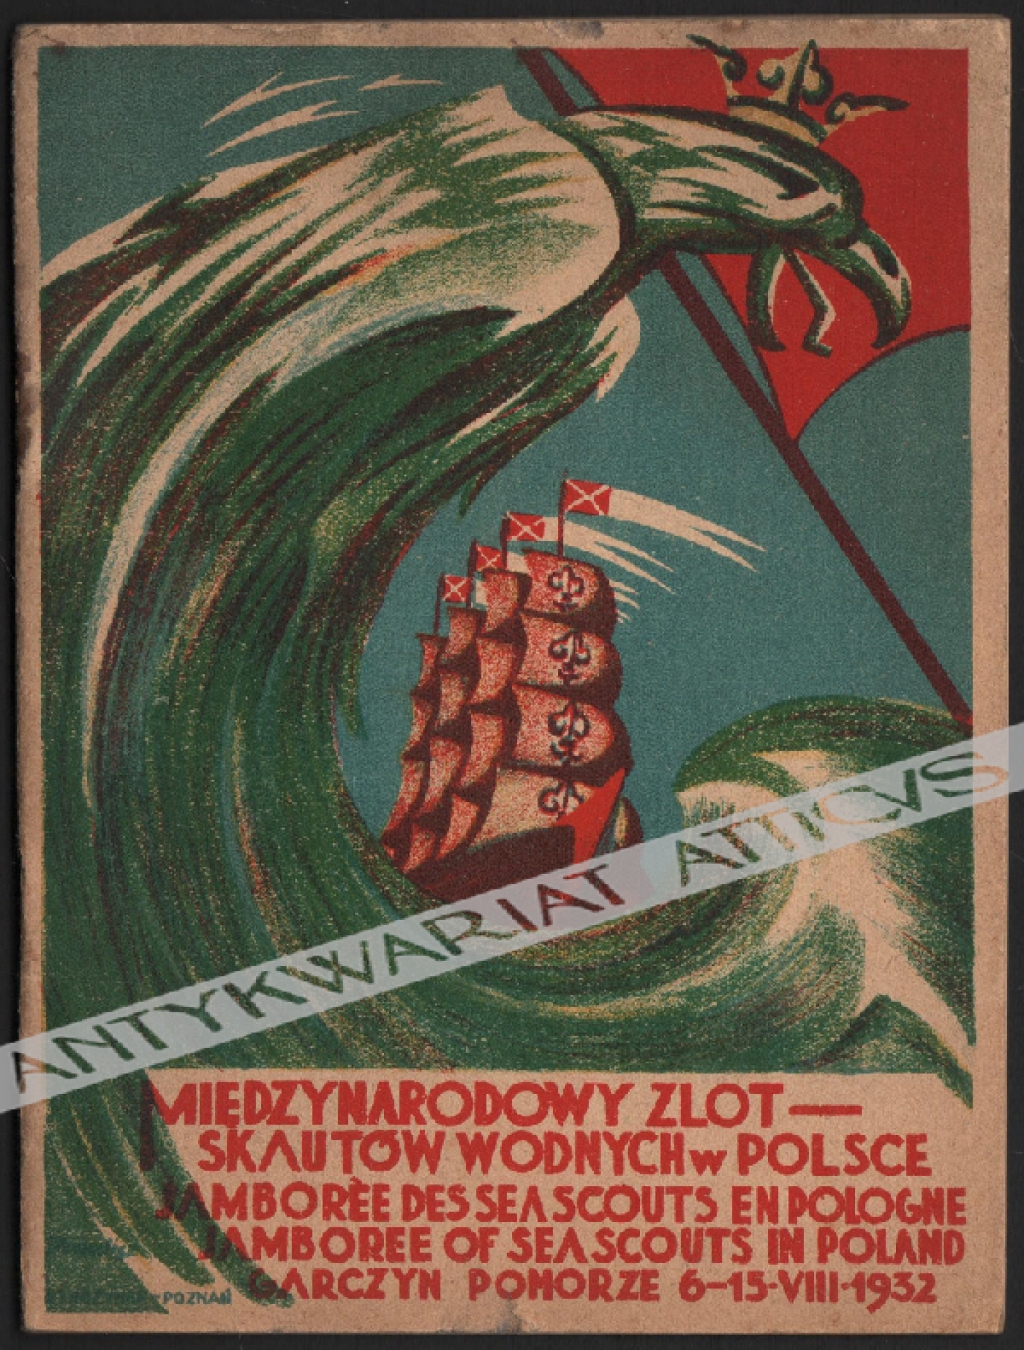 Międzynarodowy Zlot Skautów Wodnych w Polsce. Garczyn Pomorze 6-15 sierpnia 1932 Jamboree des Sea-Scouts en Pologne Jamboree of Sea Scouts in Poland